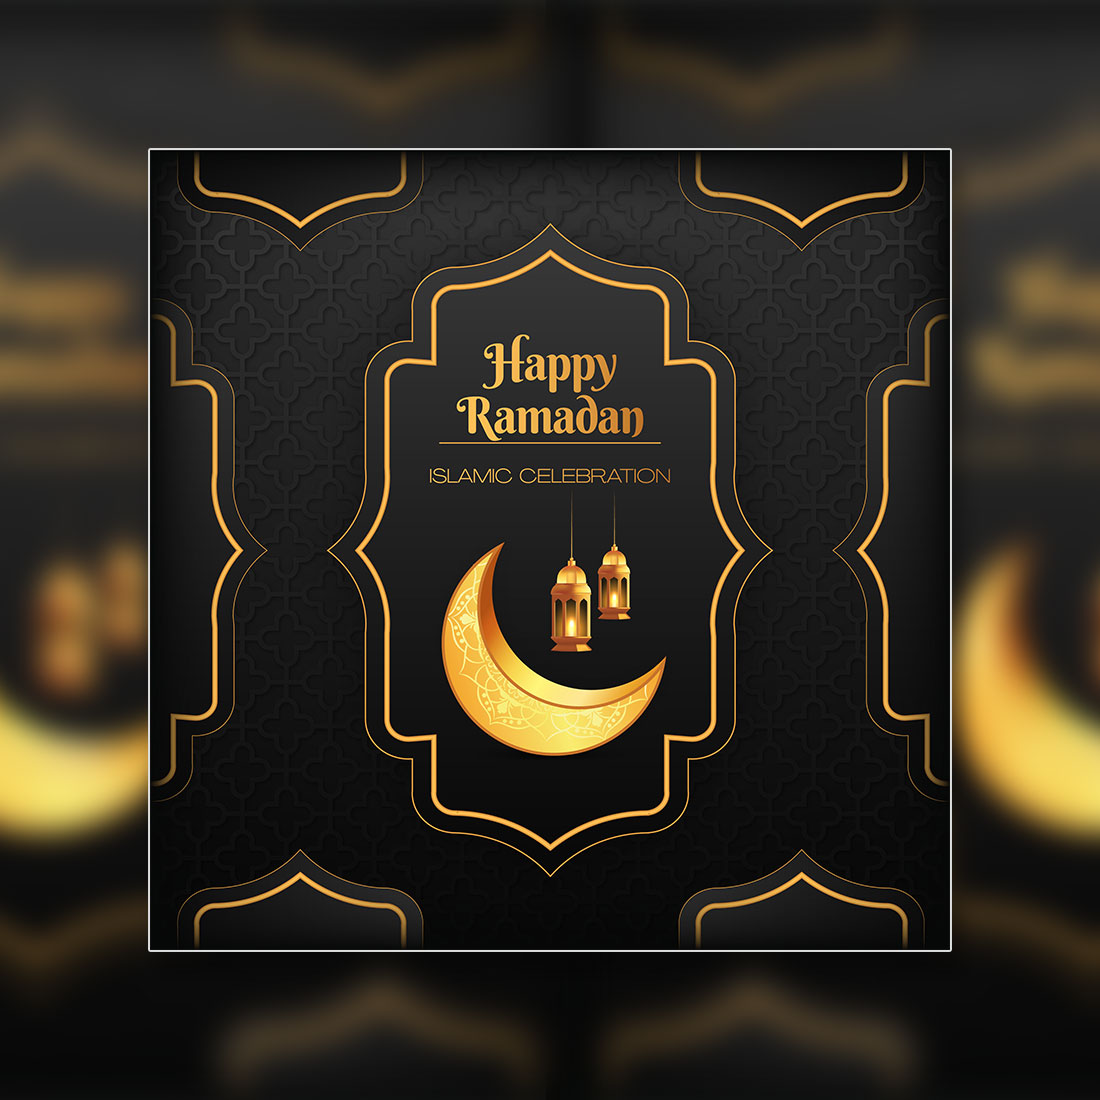 Ramadan Kareem greeting card design with Islamic background cover image.